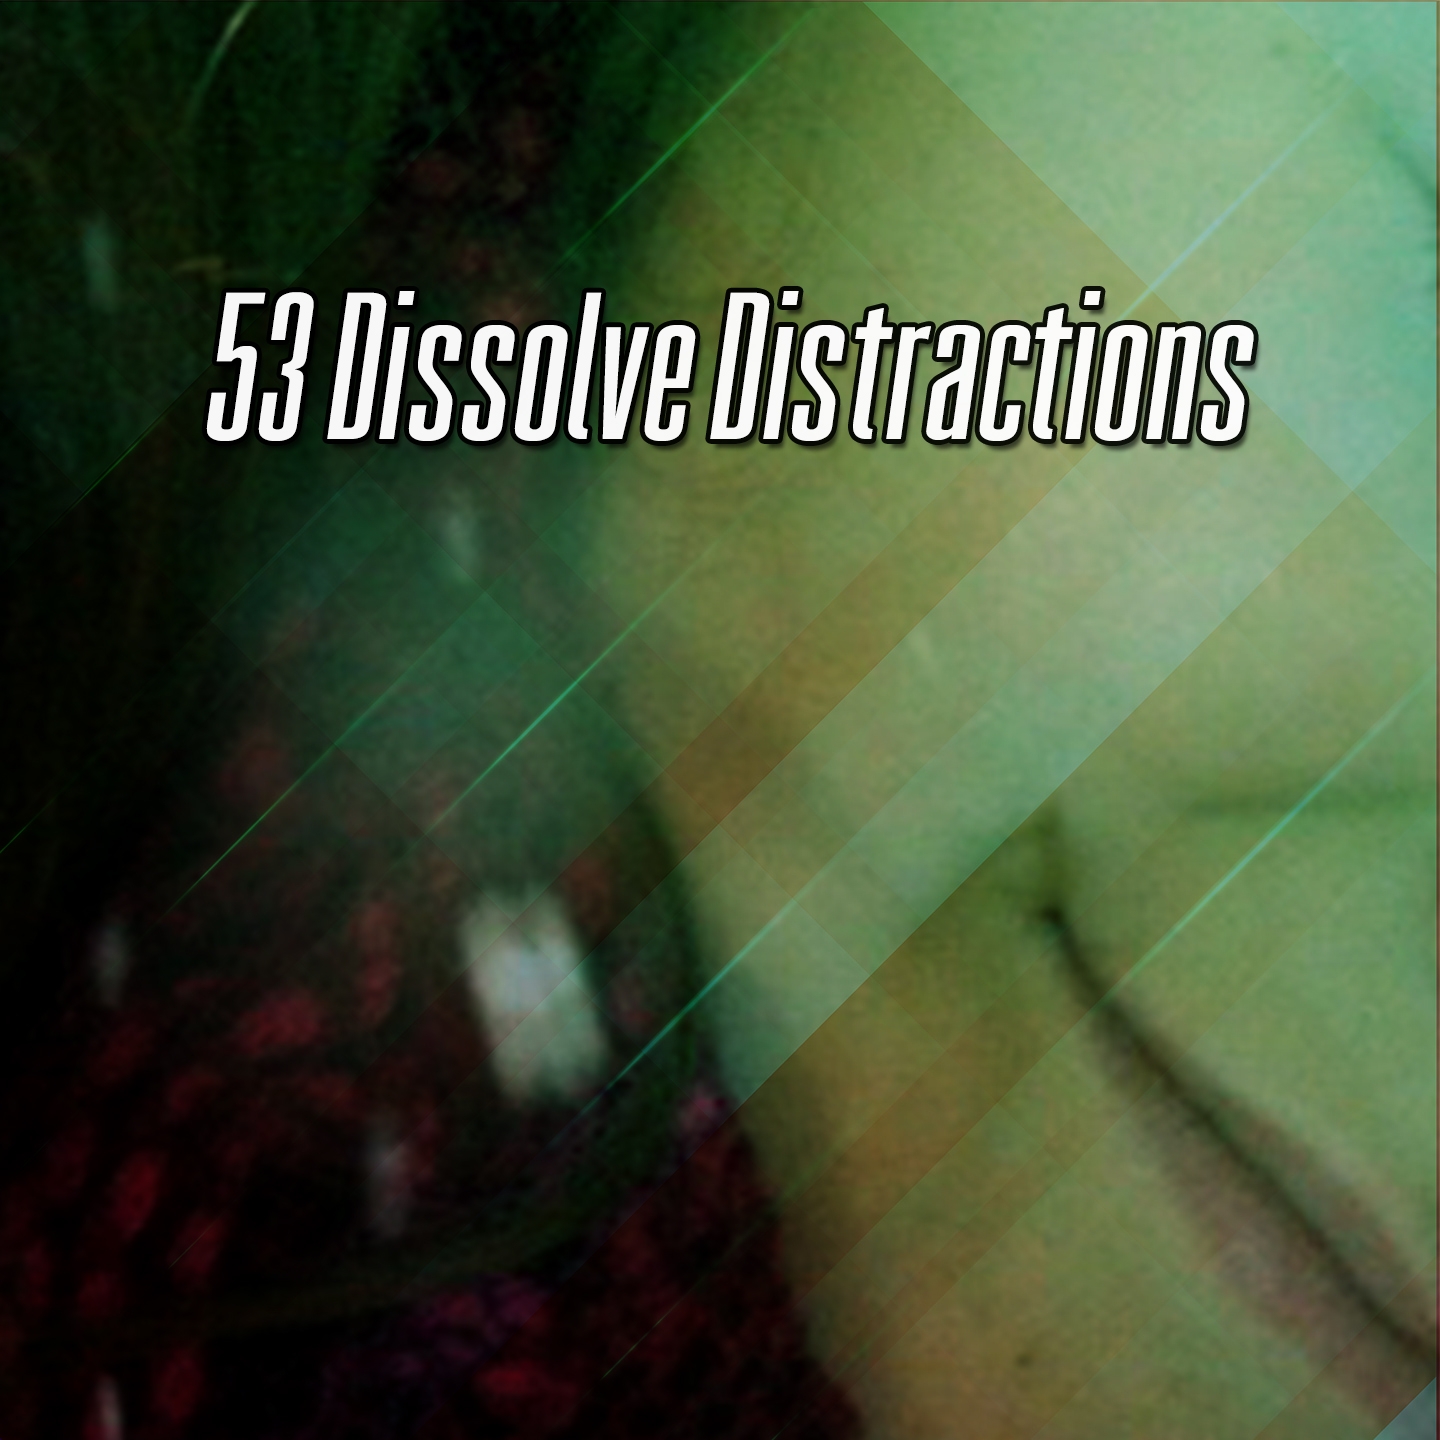 53 Dissolve Distractions